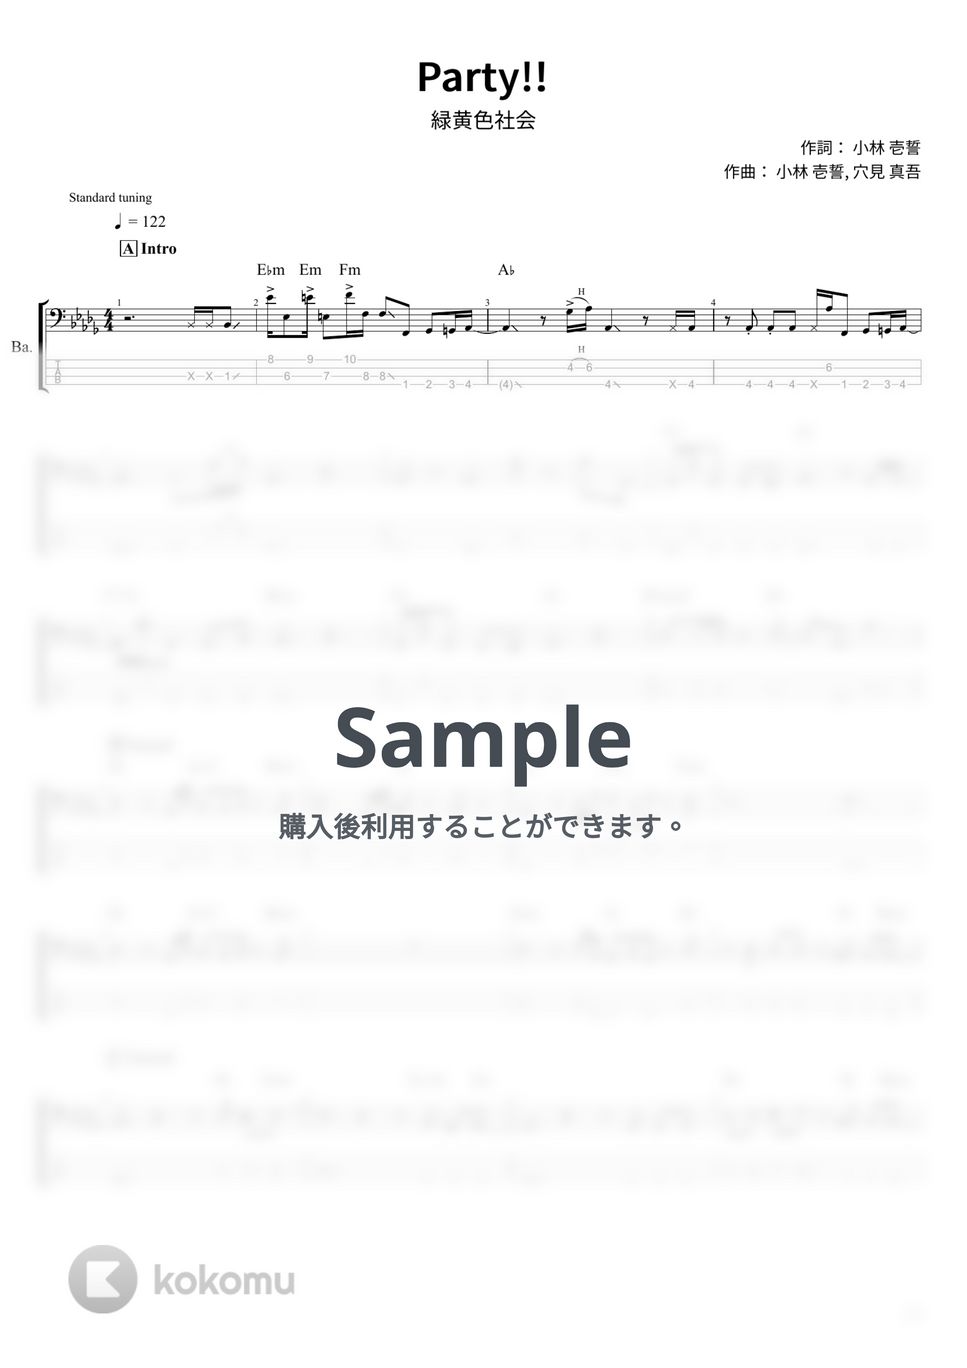 緑黄色社会 - Party!! (ベース Tab譜 4弦) by T's bass score